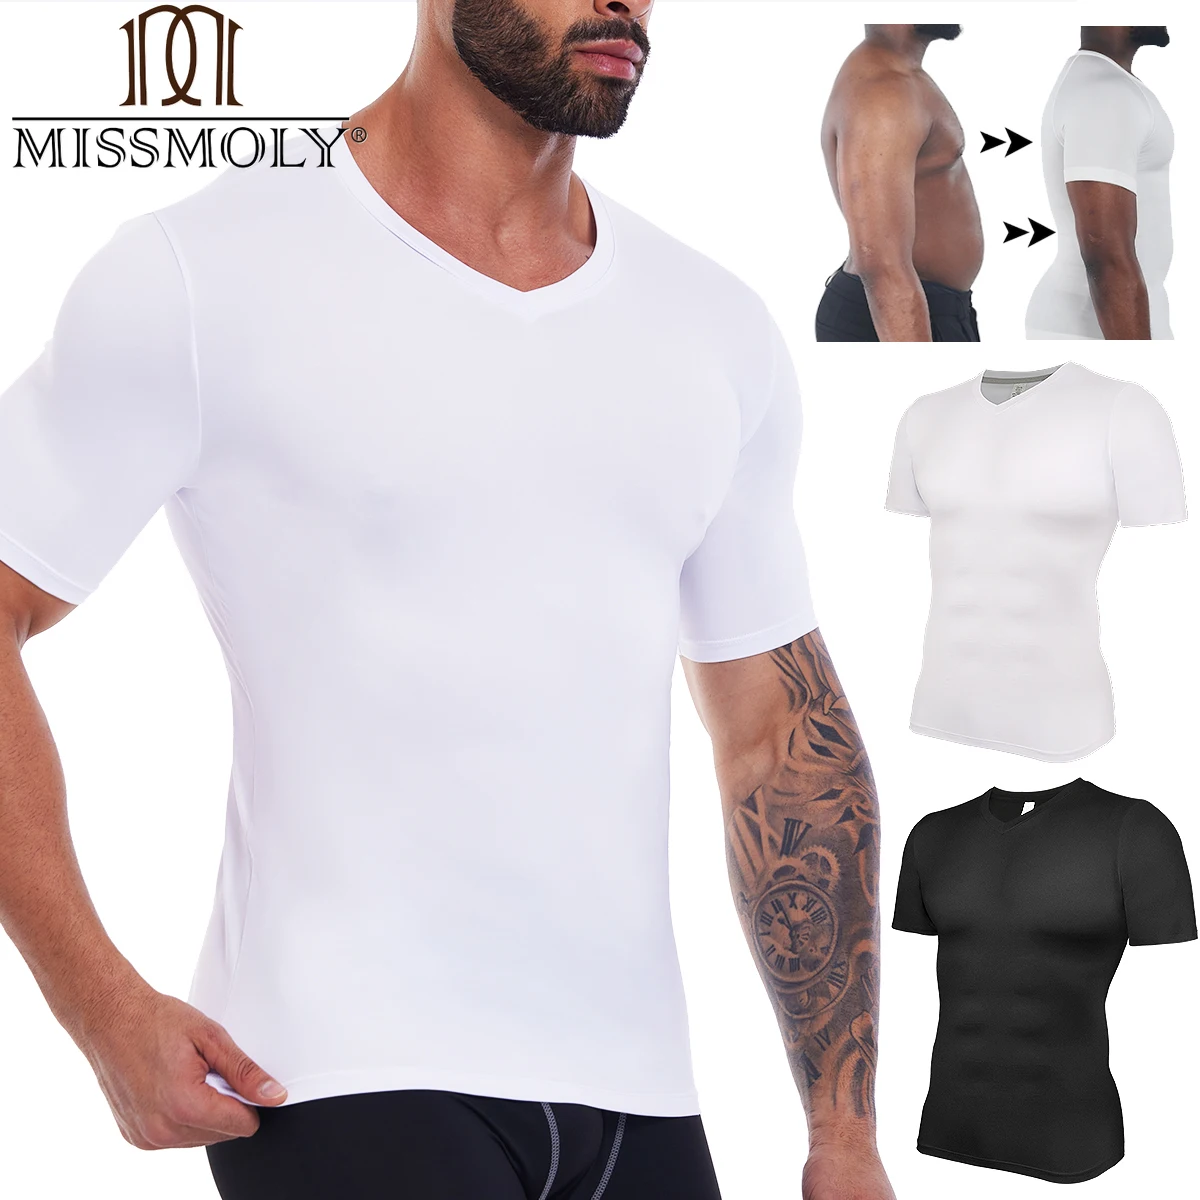 Mens Body Shaper Waist Trainer Compression Shirts V-Neck Short Sleeved Slimming Undershirt Workout Abs Abdomen Tight Corset Tops